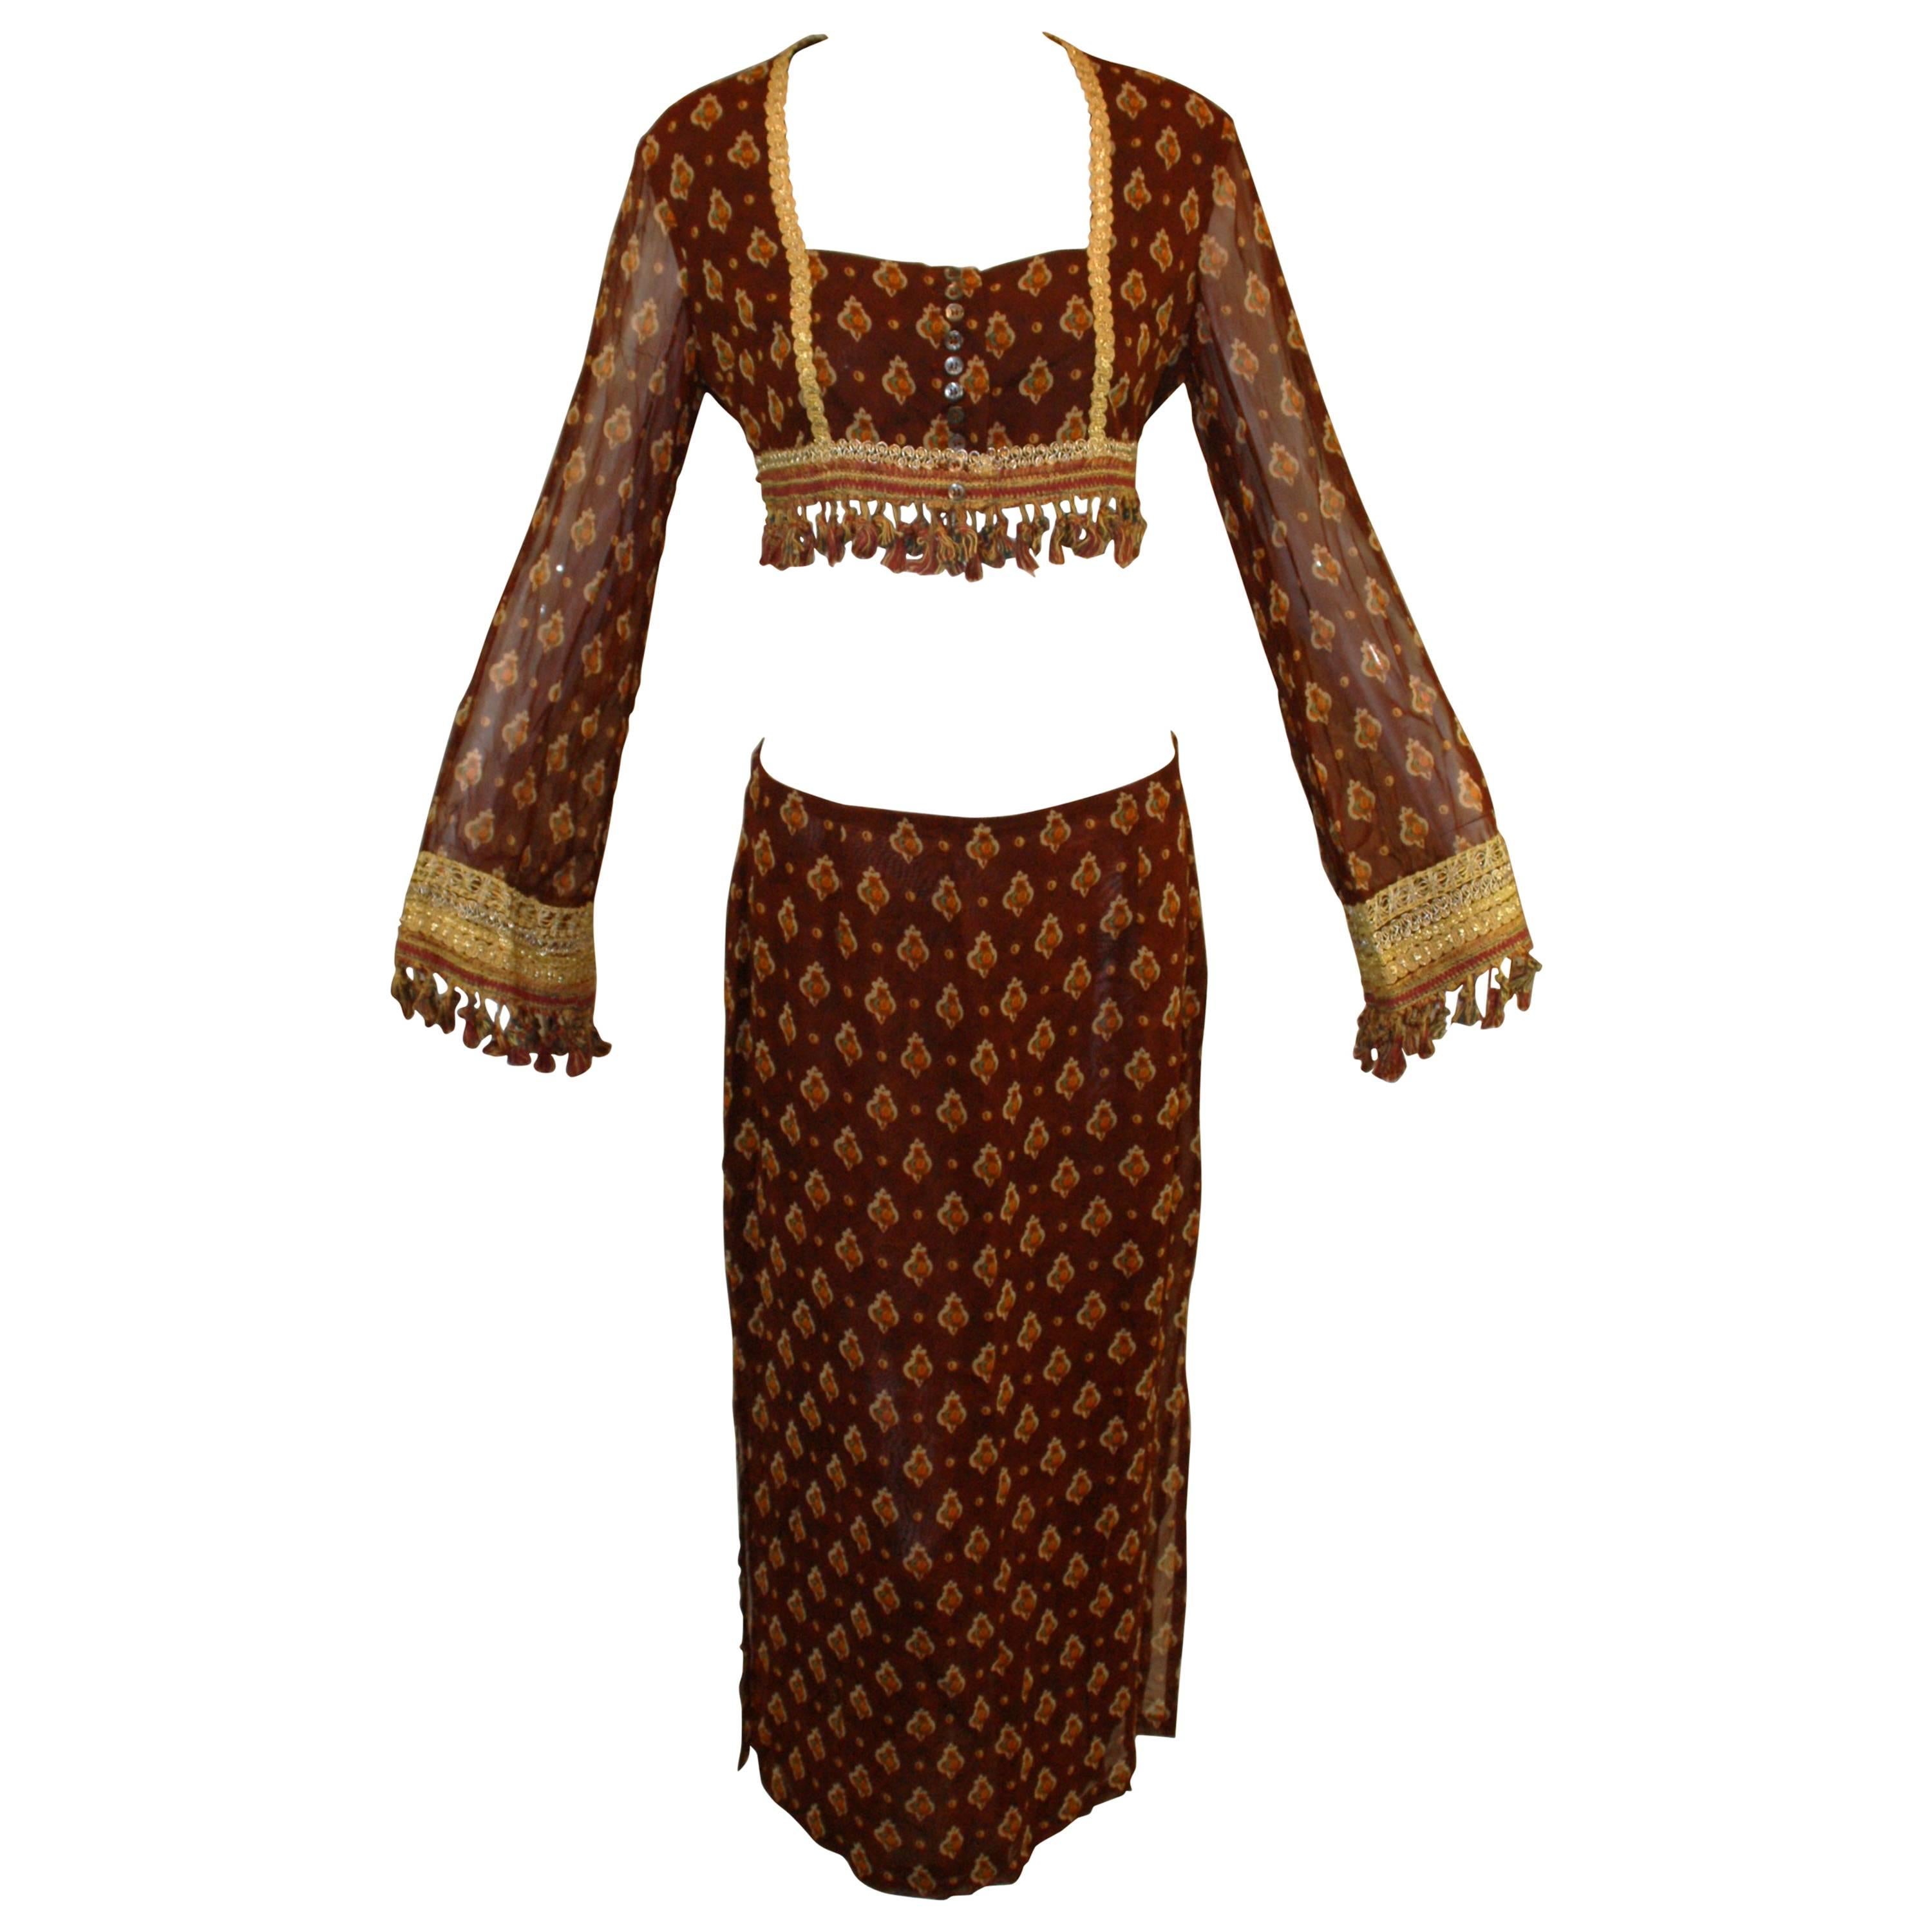 S/S 1994 Runway Dolce & Gabbana Gypsy Fringe Crop Top & Skirt Ensemble Suit 